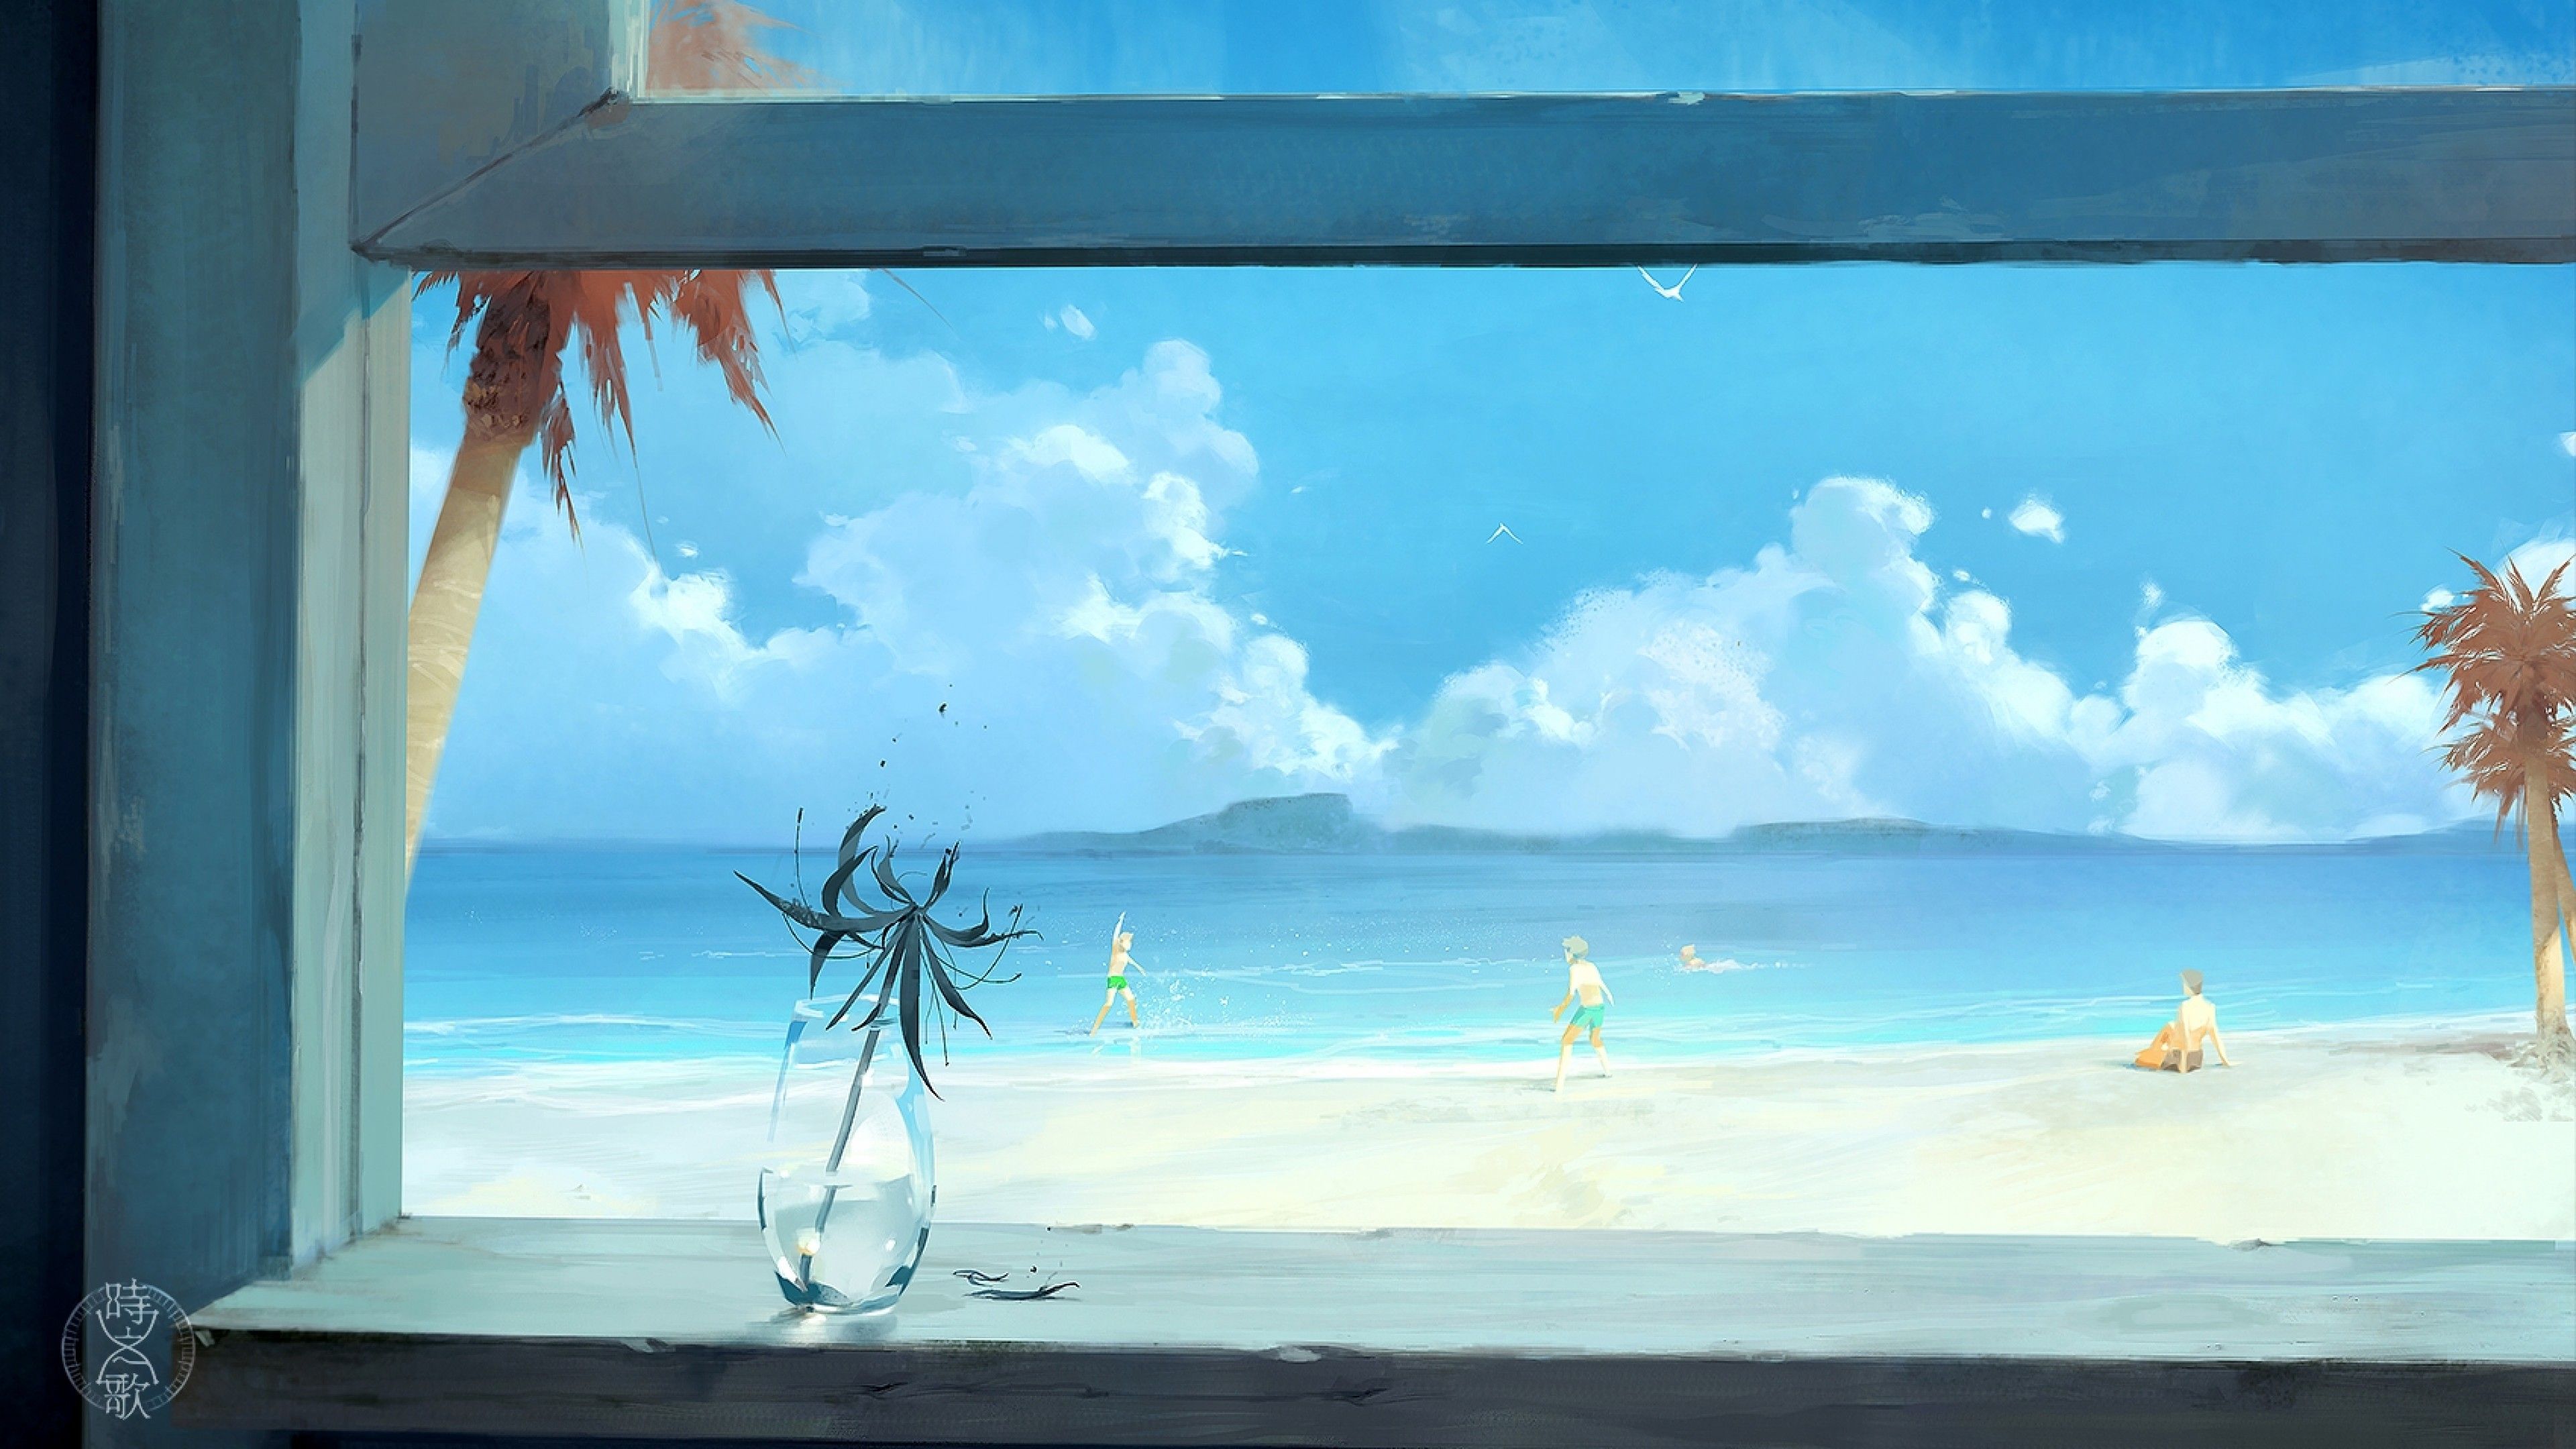 Download 3840x2160 Anime Landscape, Beach, Clouds, Window